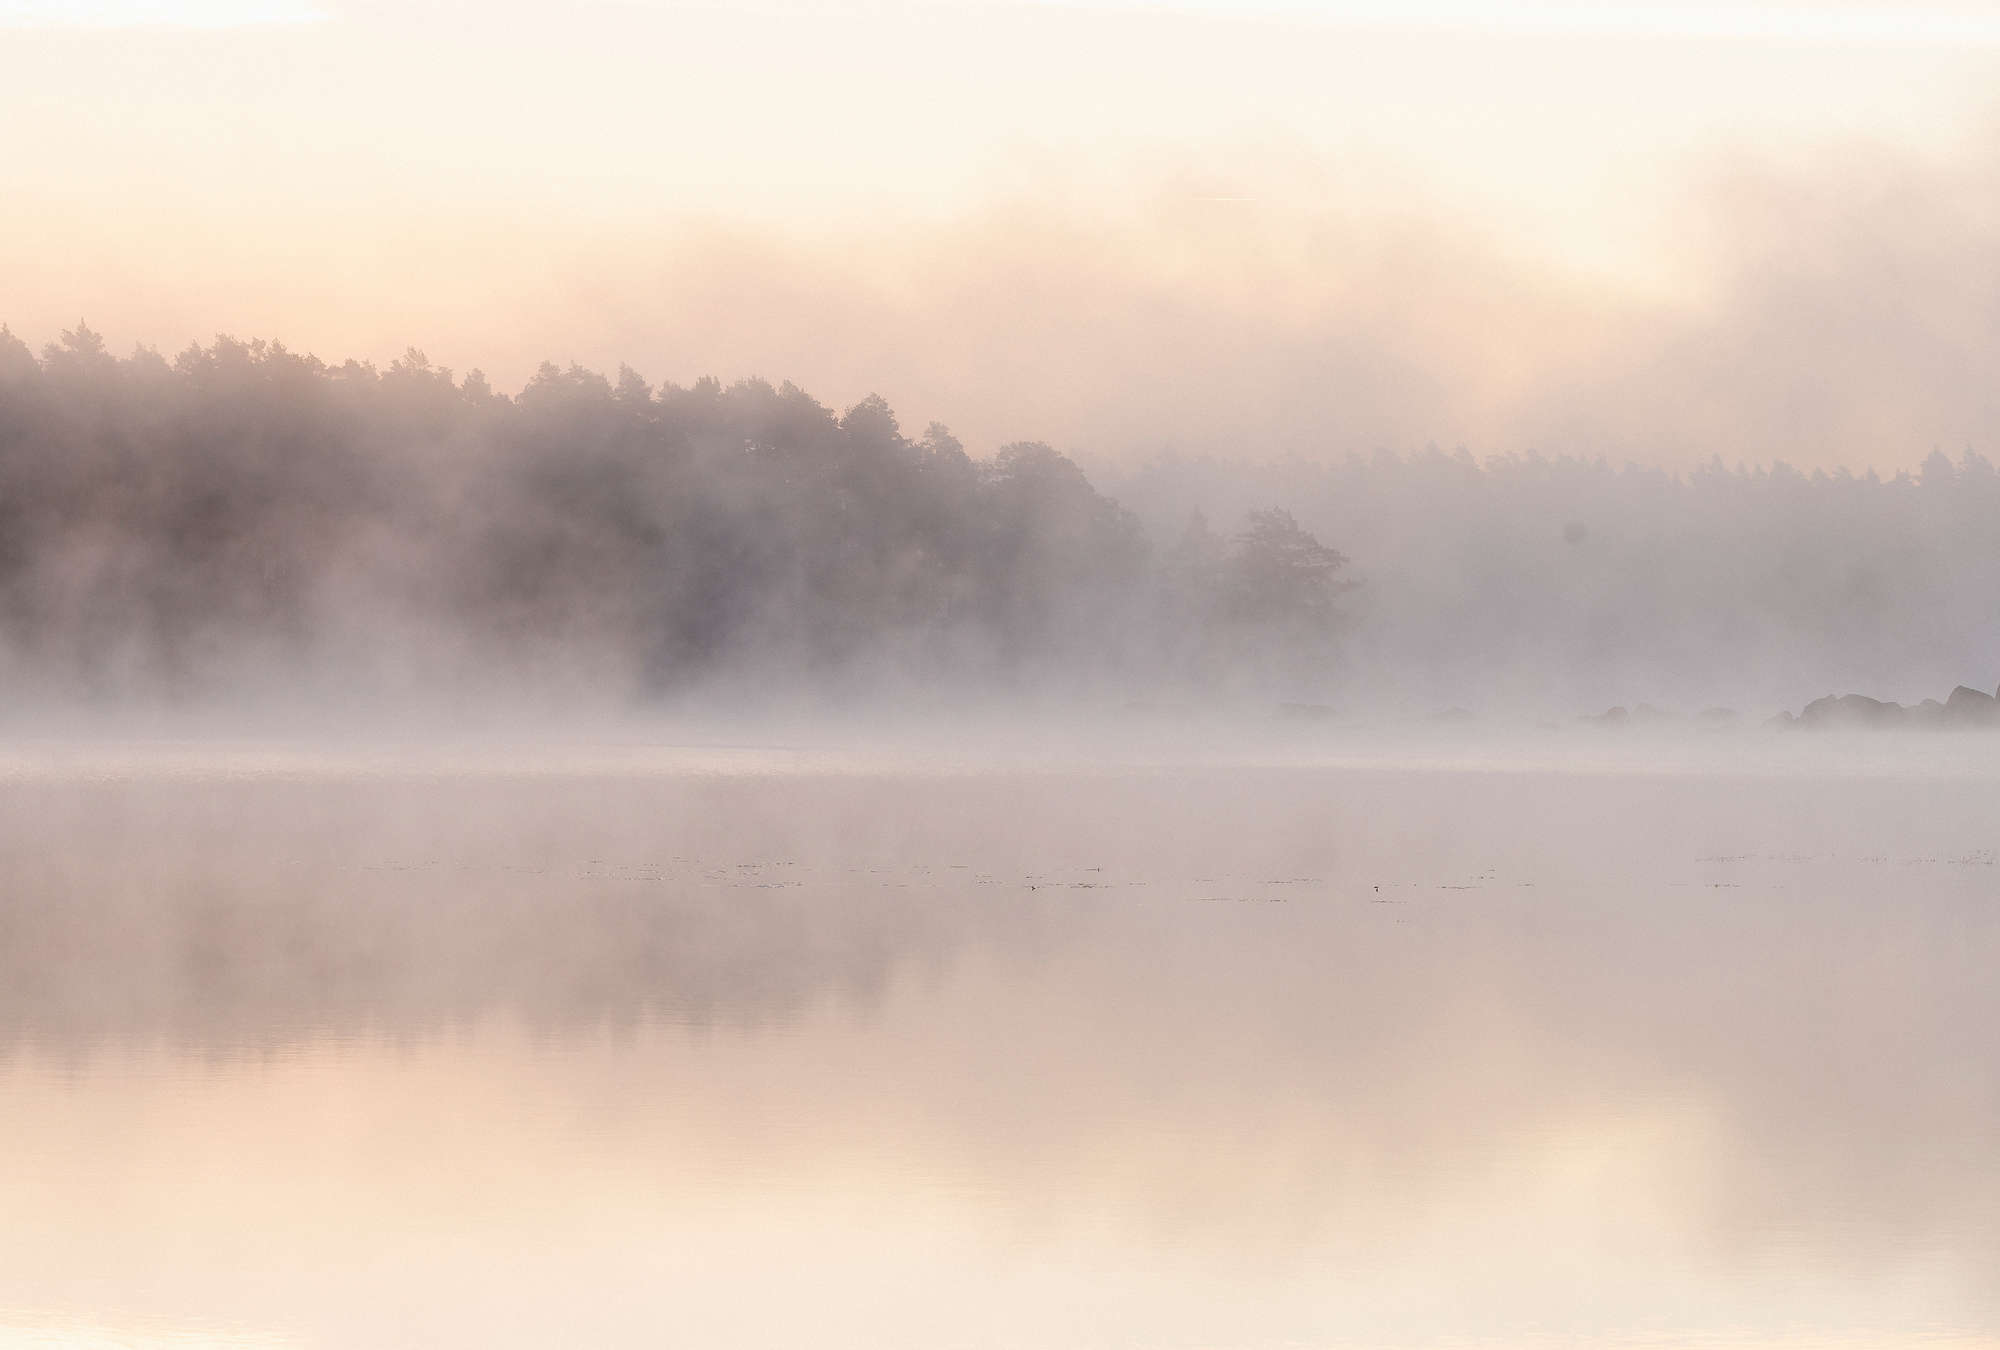             Avalon 2 - Fondo de pantalla del lago matutino con niebla matutina
        